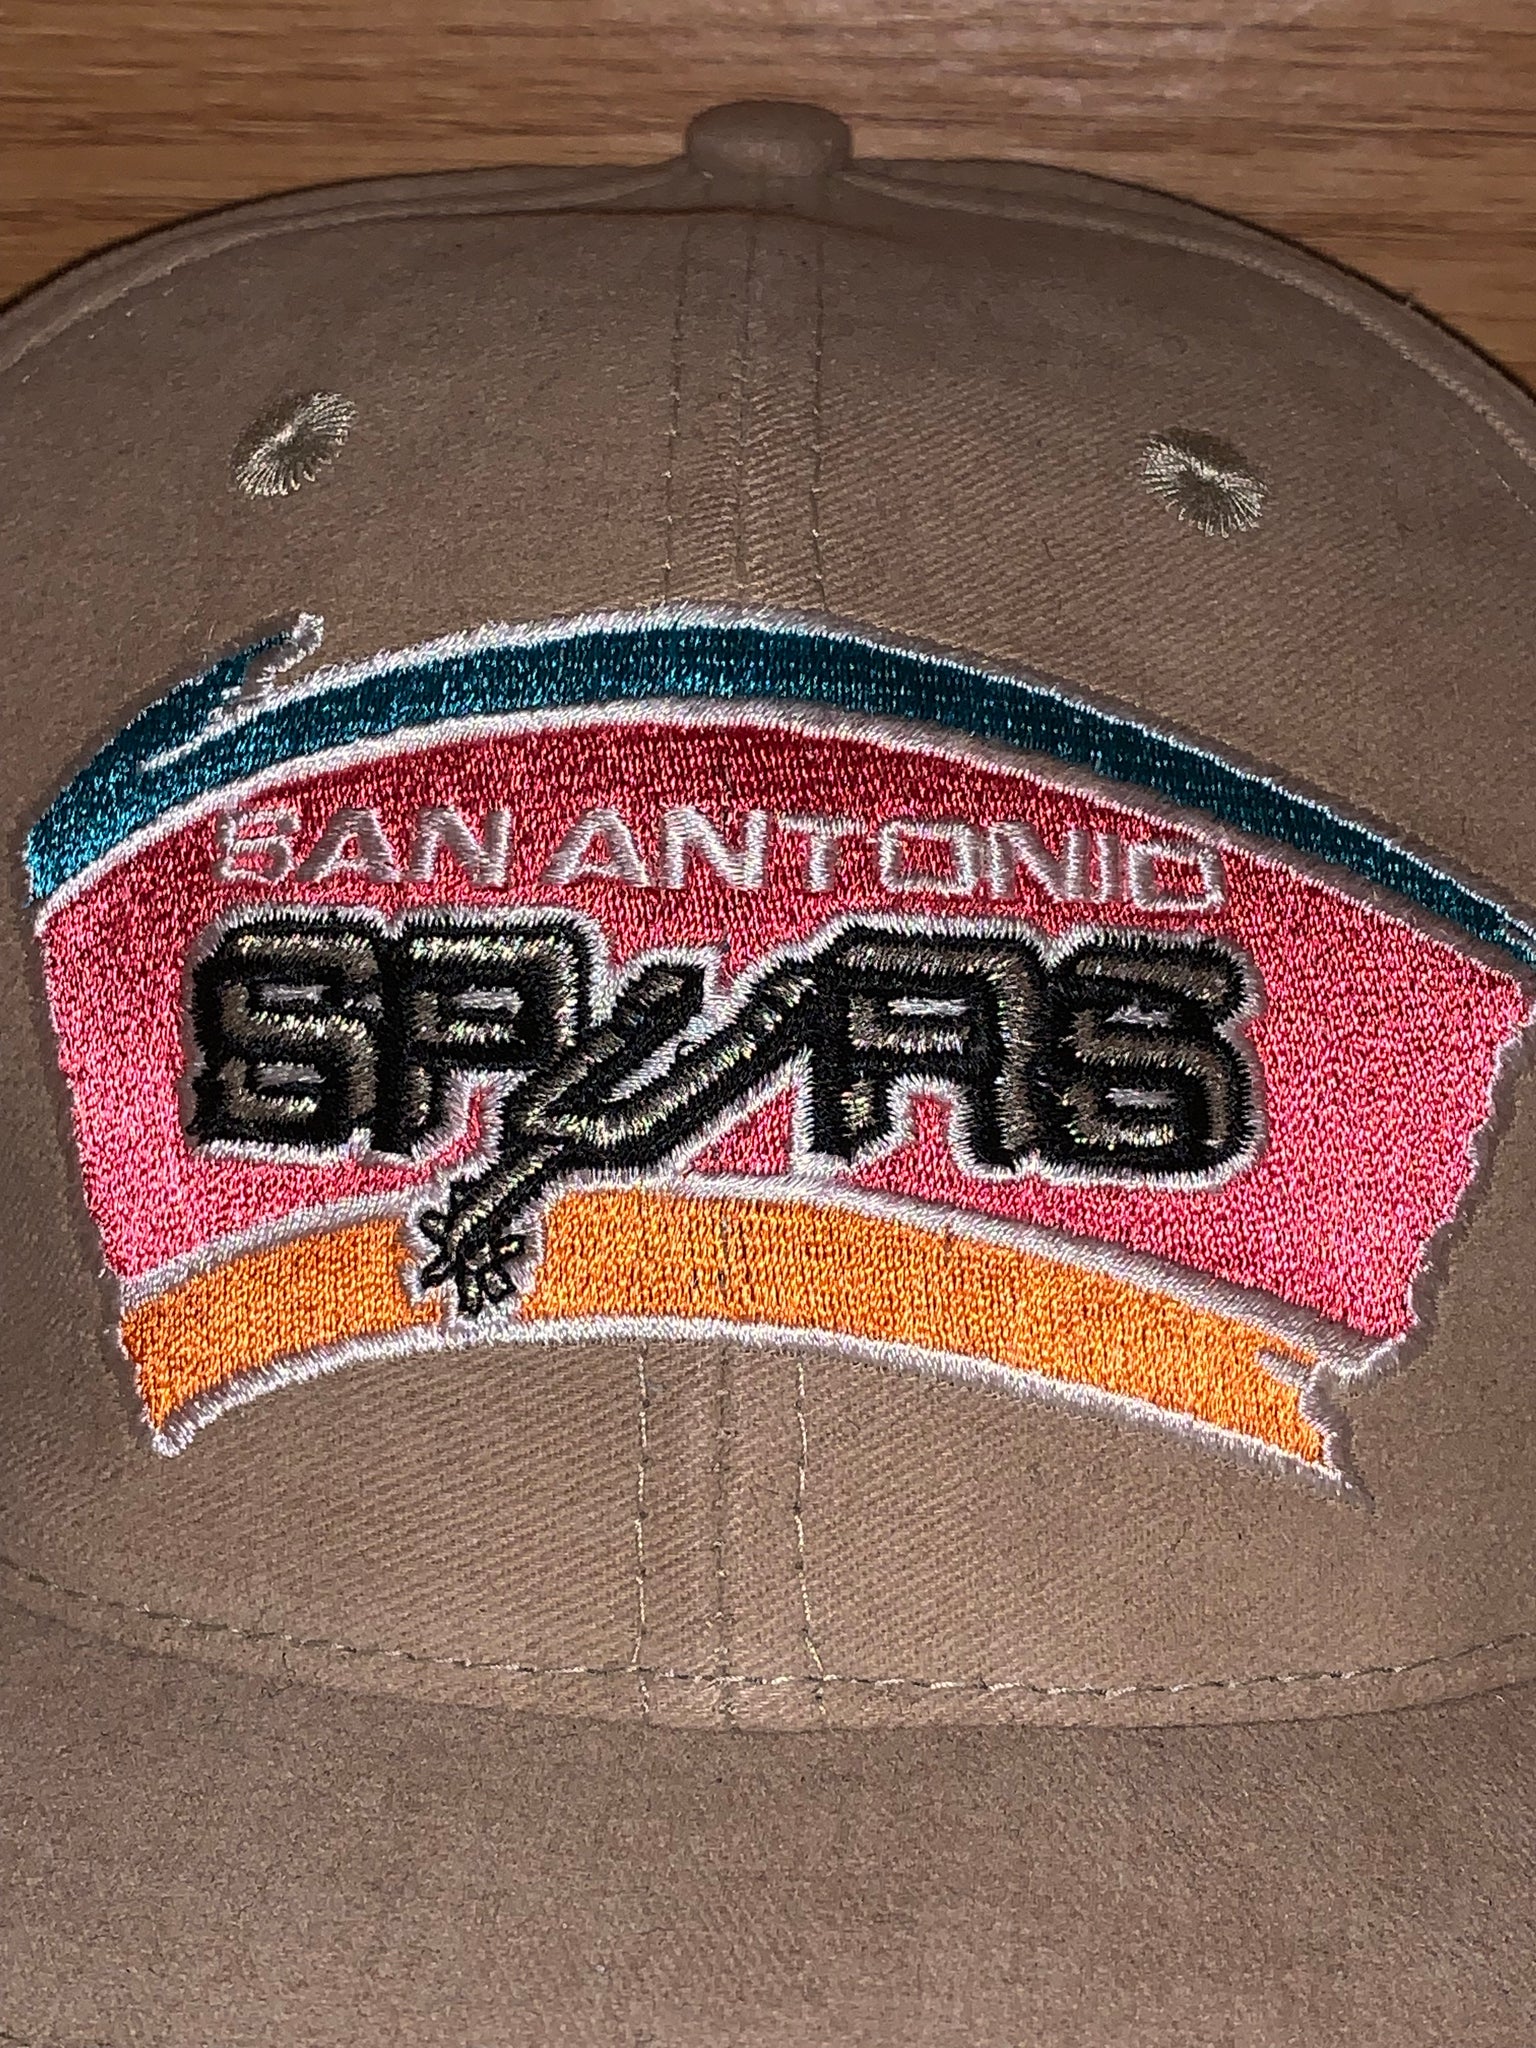 San Antonio Spurs (Old School)